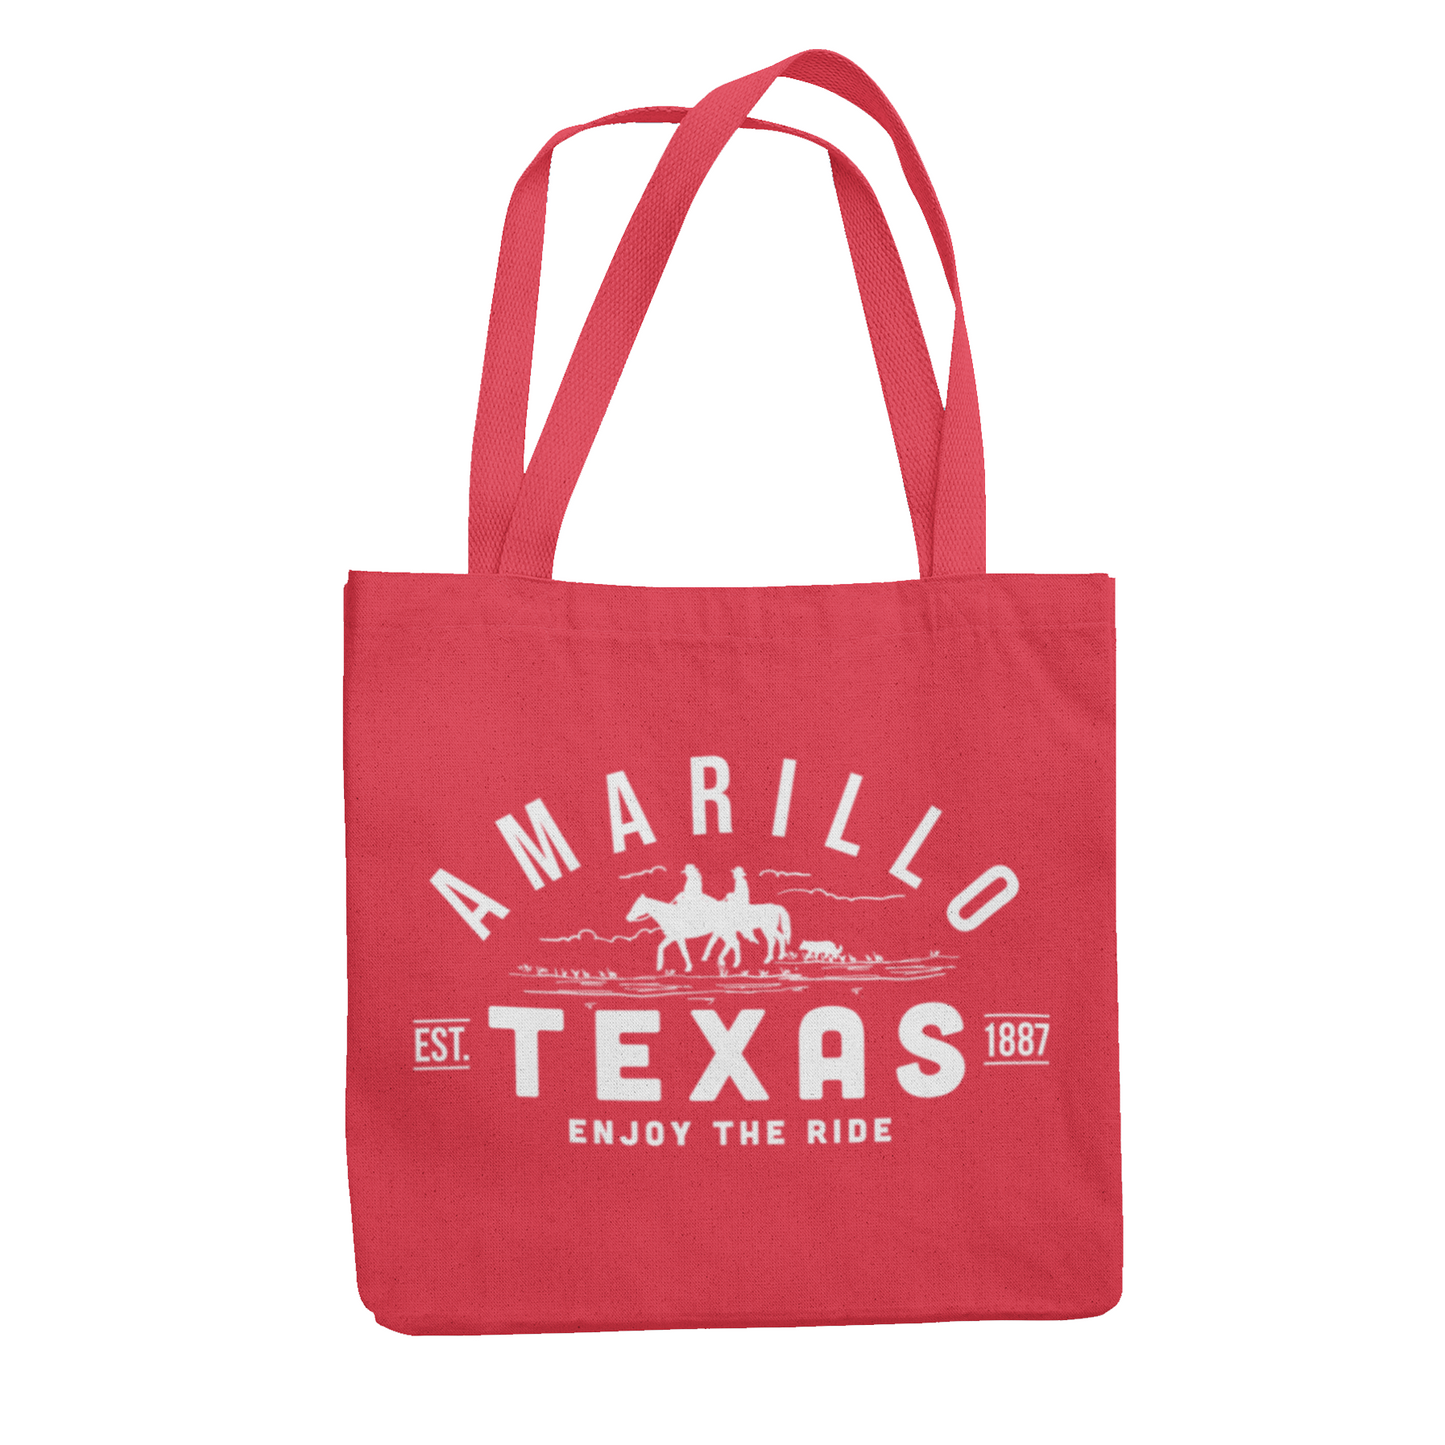 Amarillo Texas Tote Bag - Enjoy the Ride